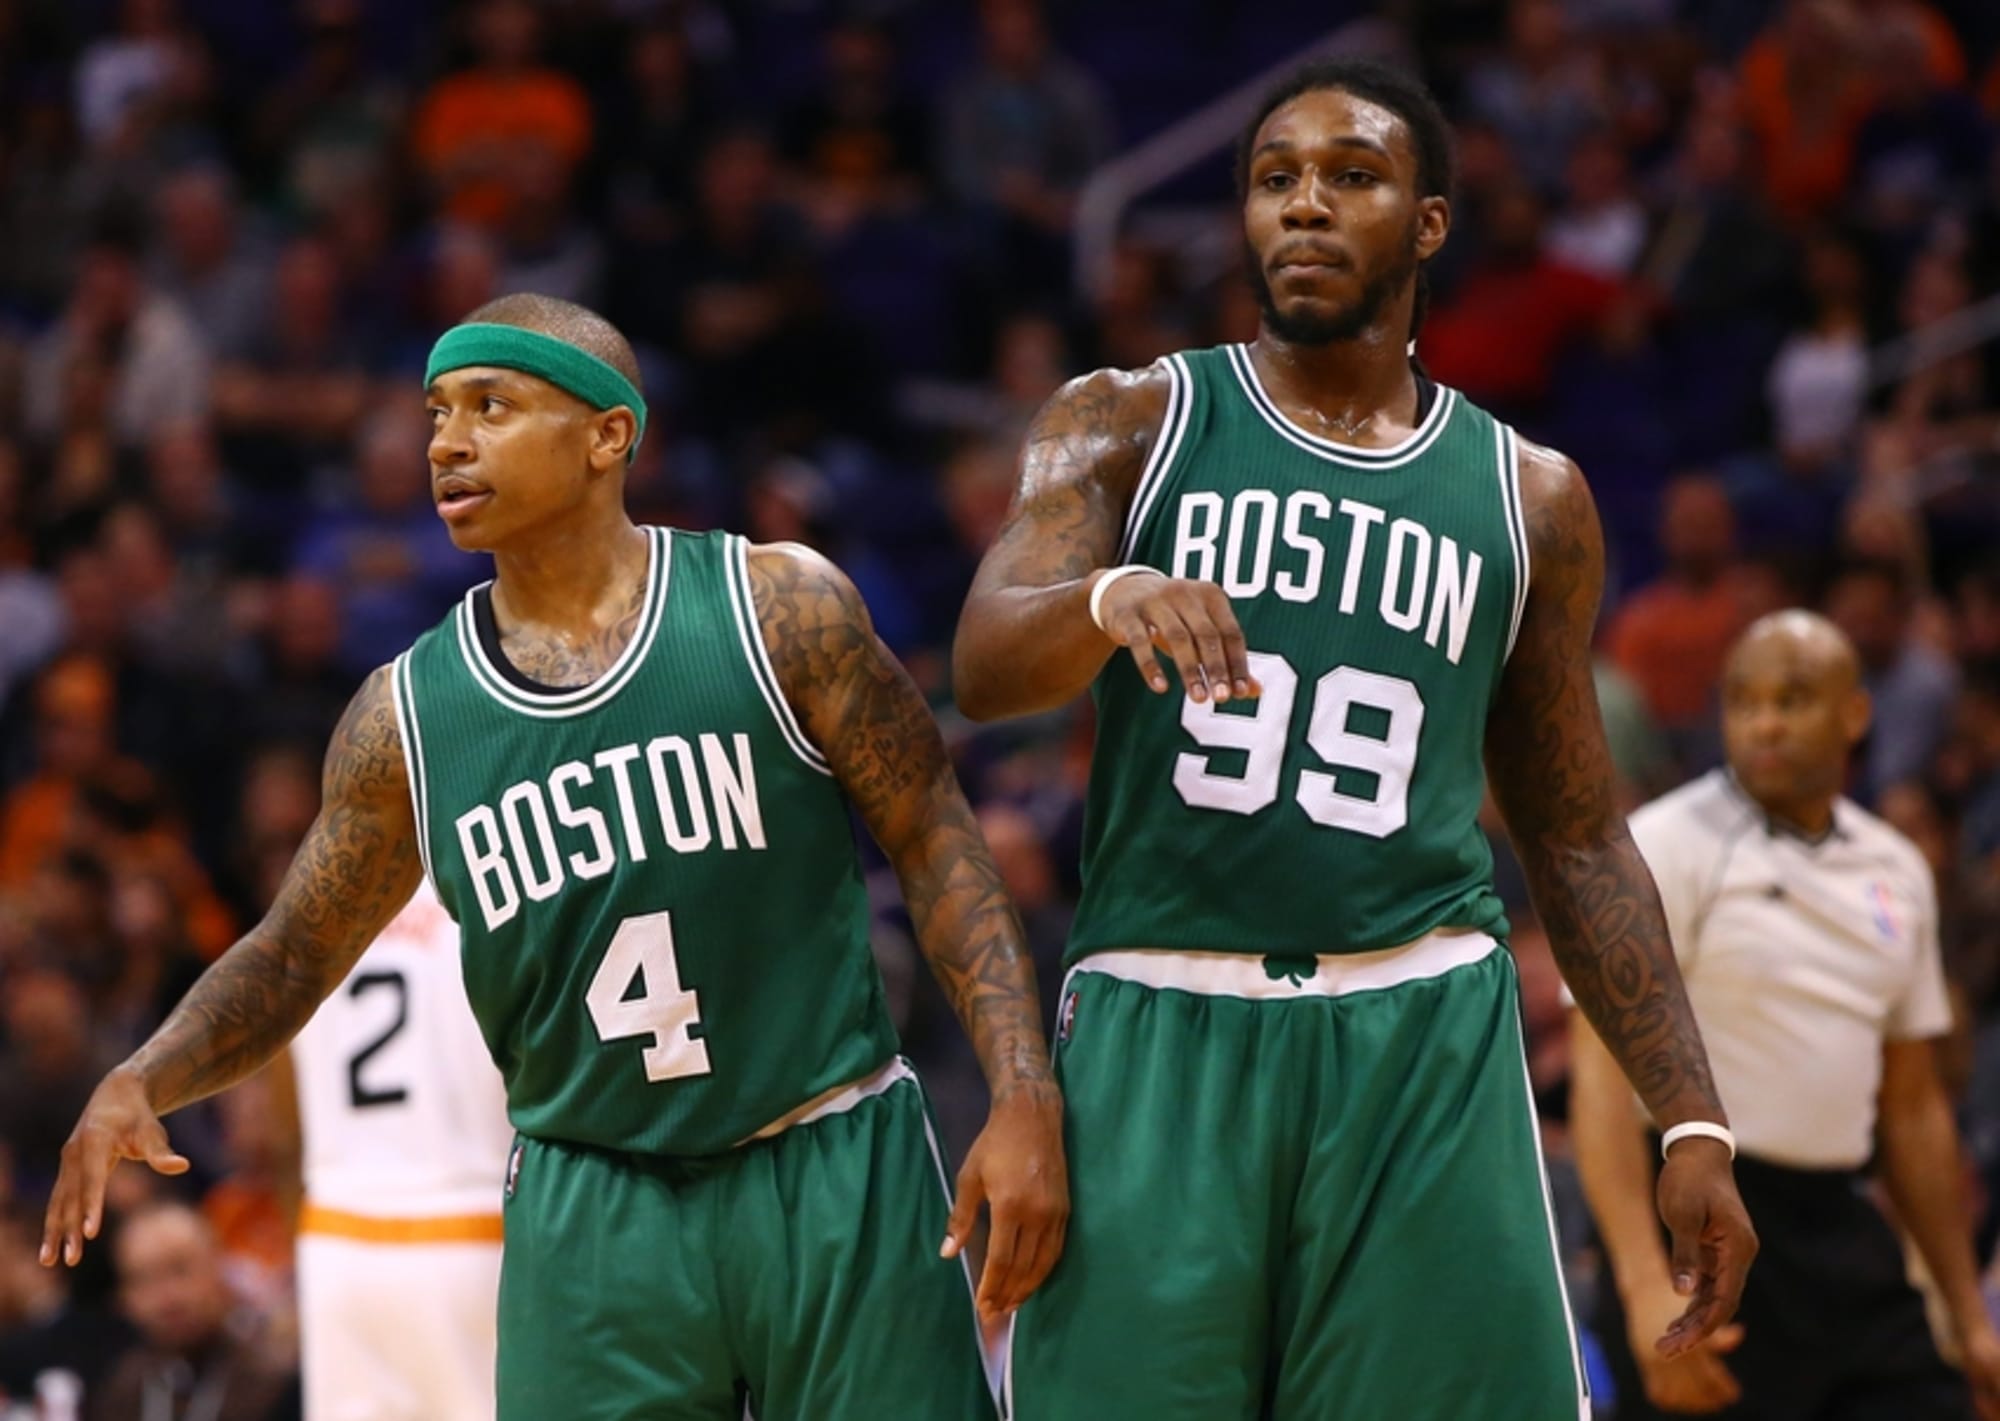 Portland Trailblazers coach Terry Stotts compares Boston Celtics